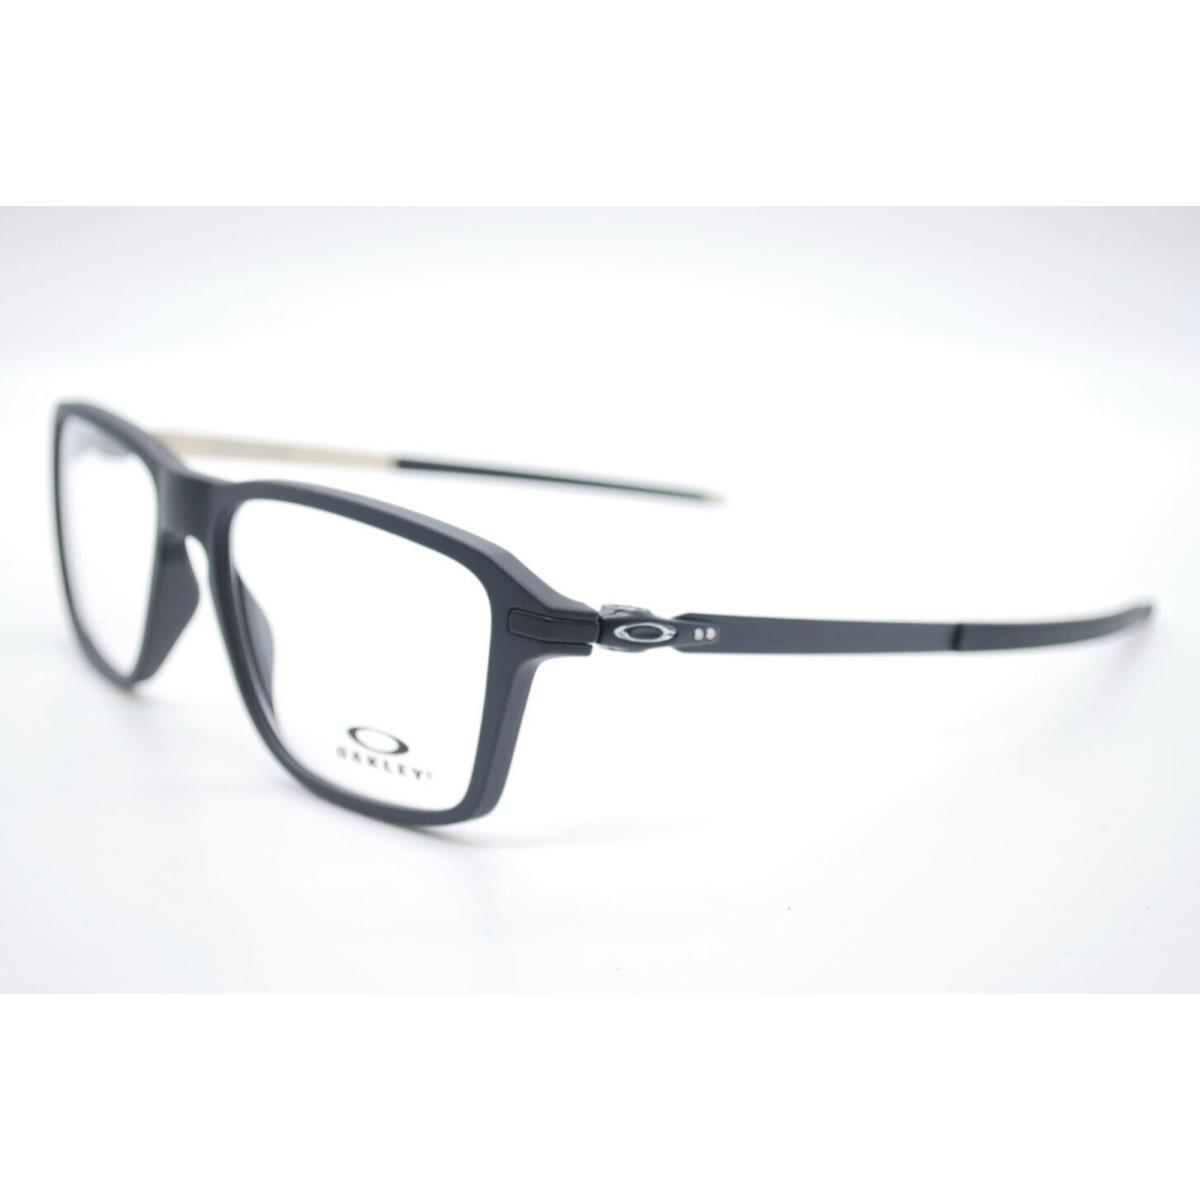 Oakley eyeglasses Wheel House - Matte Black w/ Black & Silver Temples Frame, Demos with imprint Lens 0